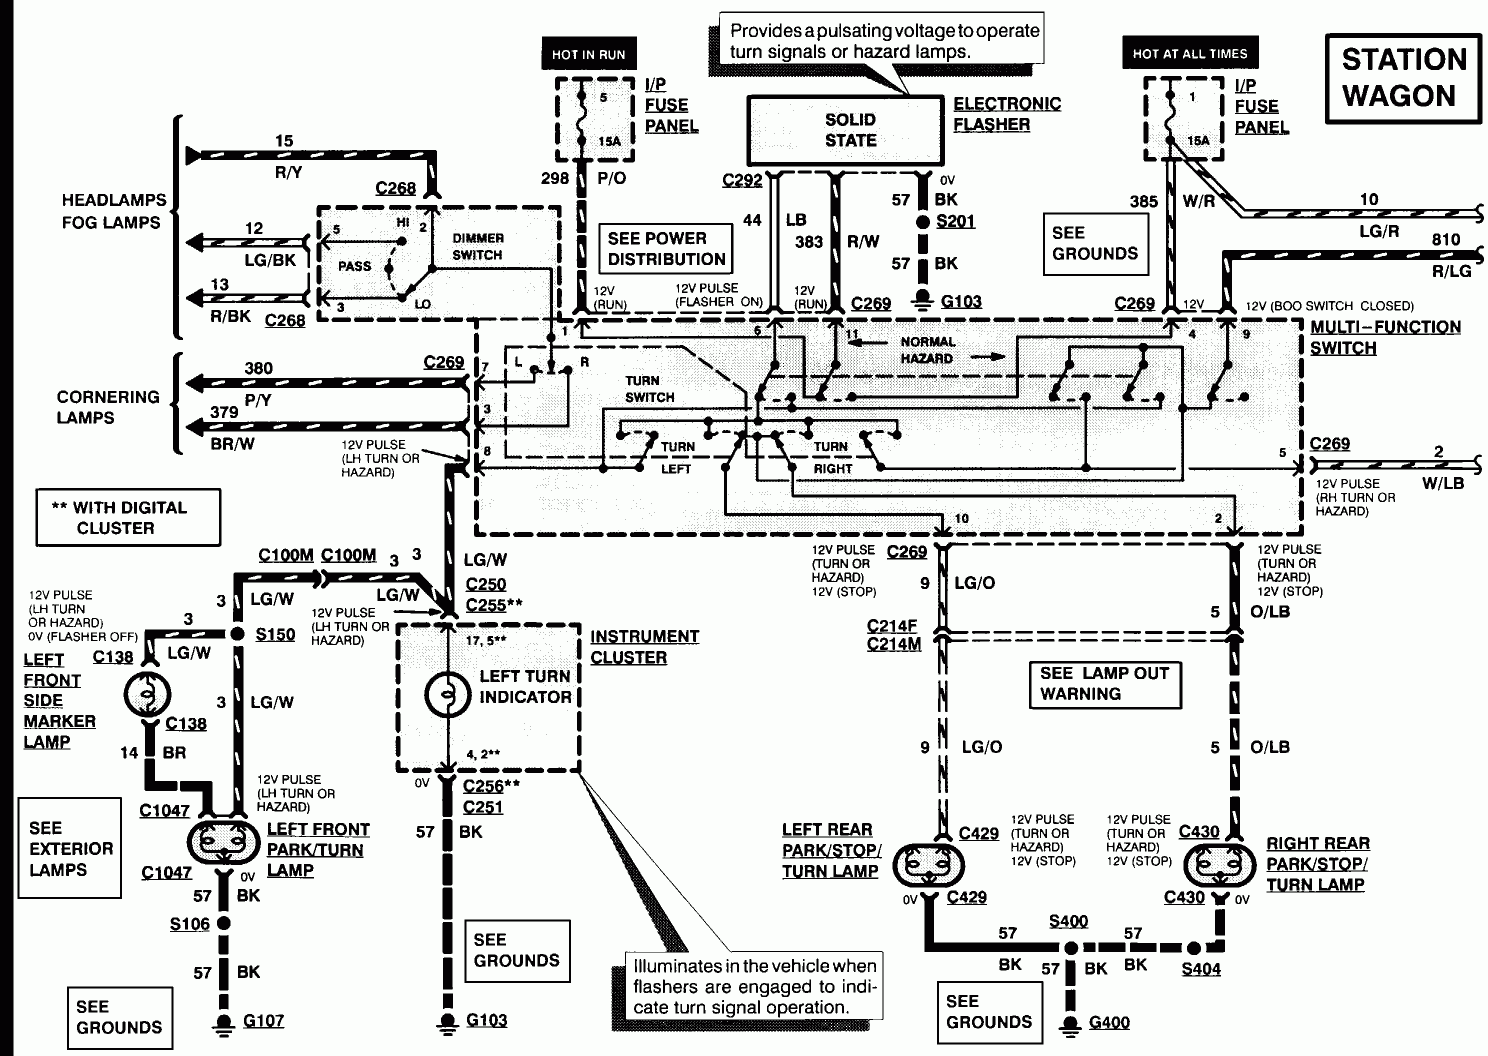 Diagram] 2007 Ford Taurus Wiring Diagram Full Version Hd